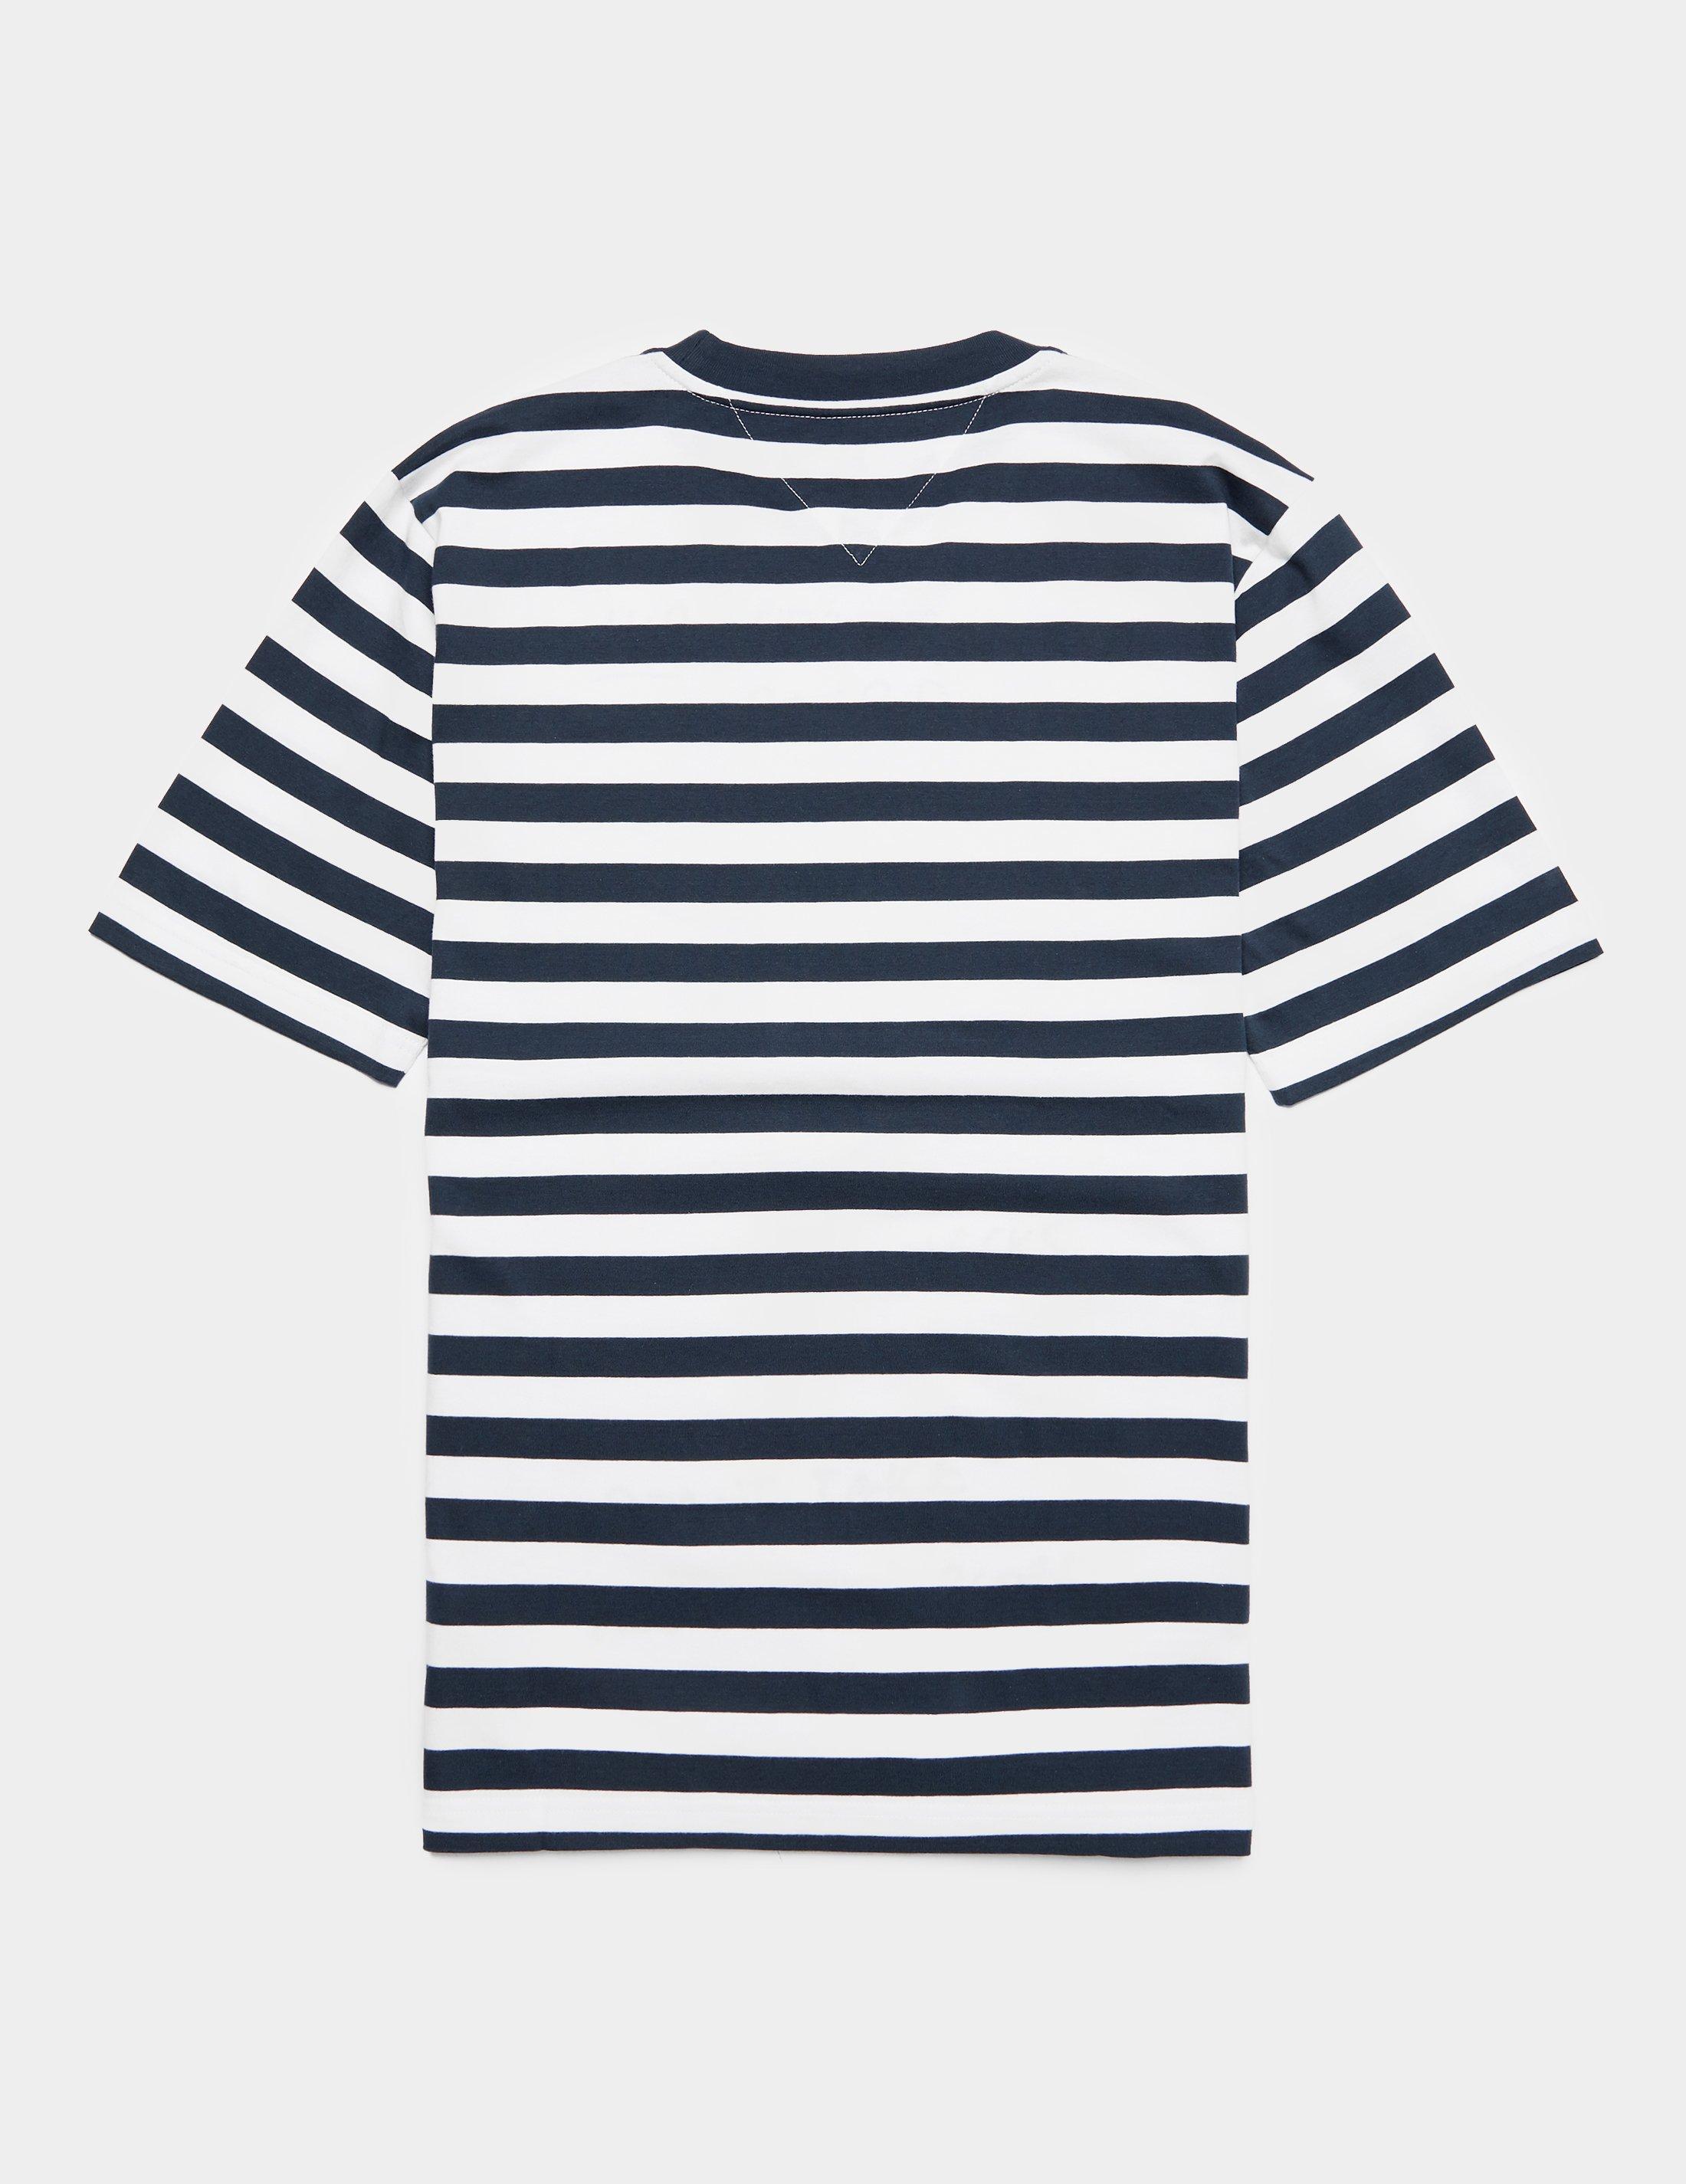 tommy hilfiger signature stripe t shirt